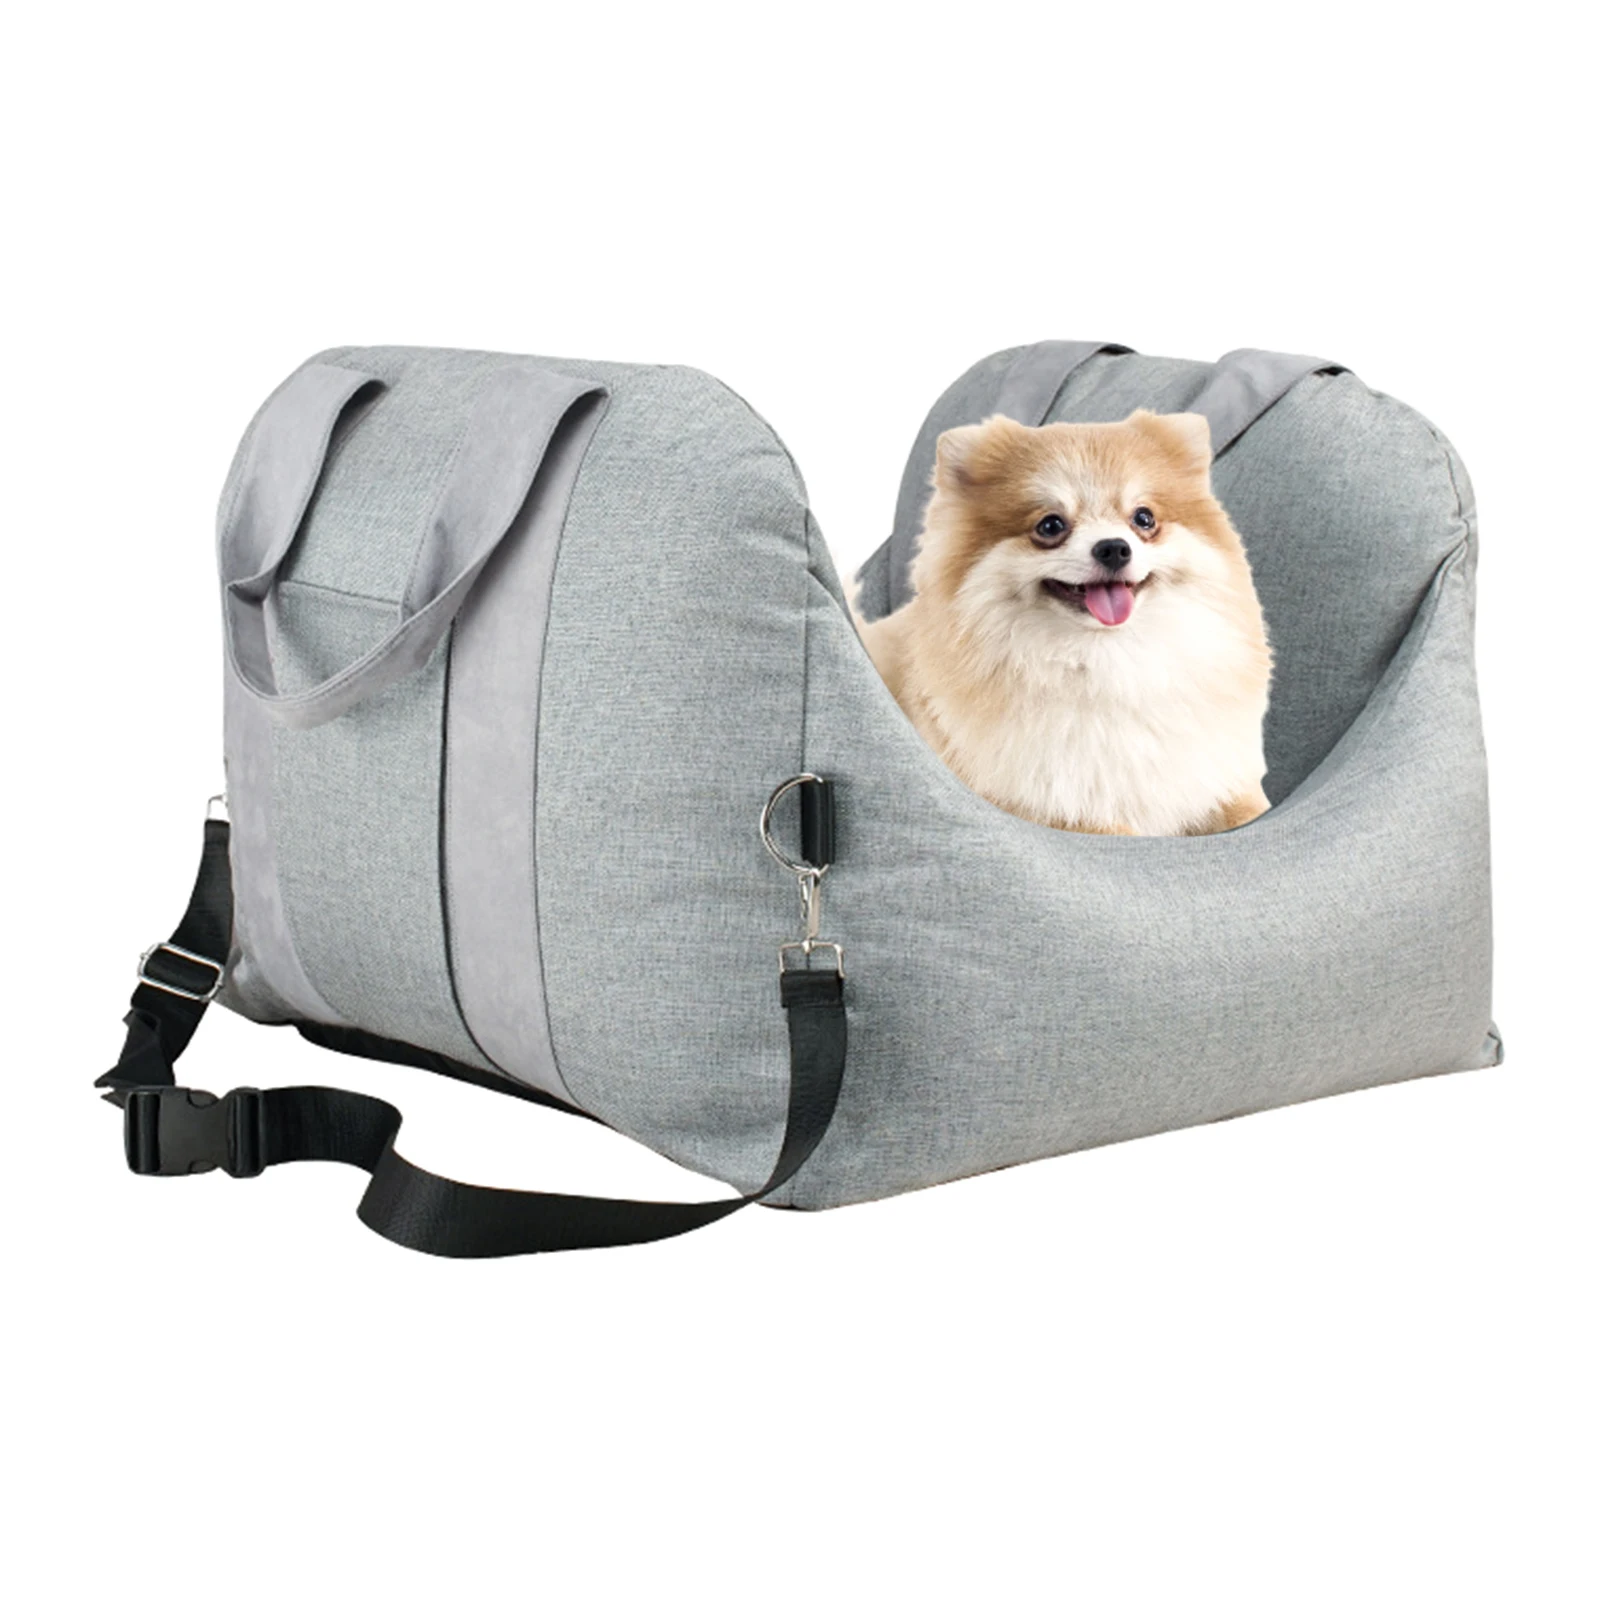 Pet Seat Safety Basket with Storage Pocket Dog Car Seat Bag for Travel Gift Car Cats